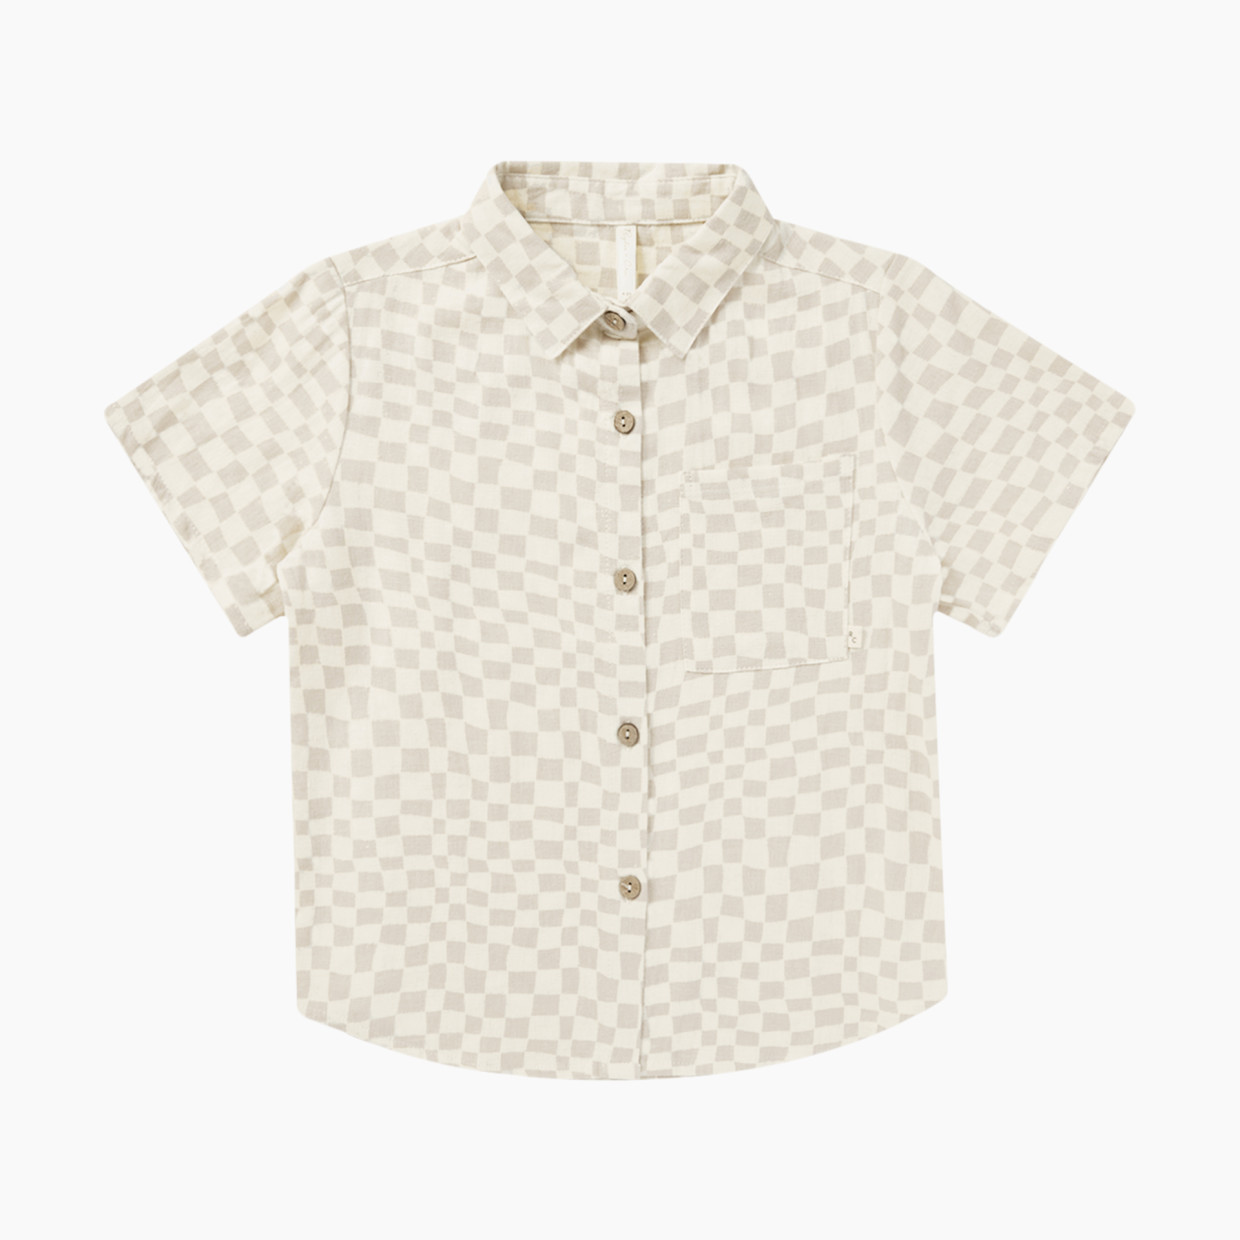 Rylee + Cru Collared Short Sleeve Shirt - Dove Check, 6-12 M.